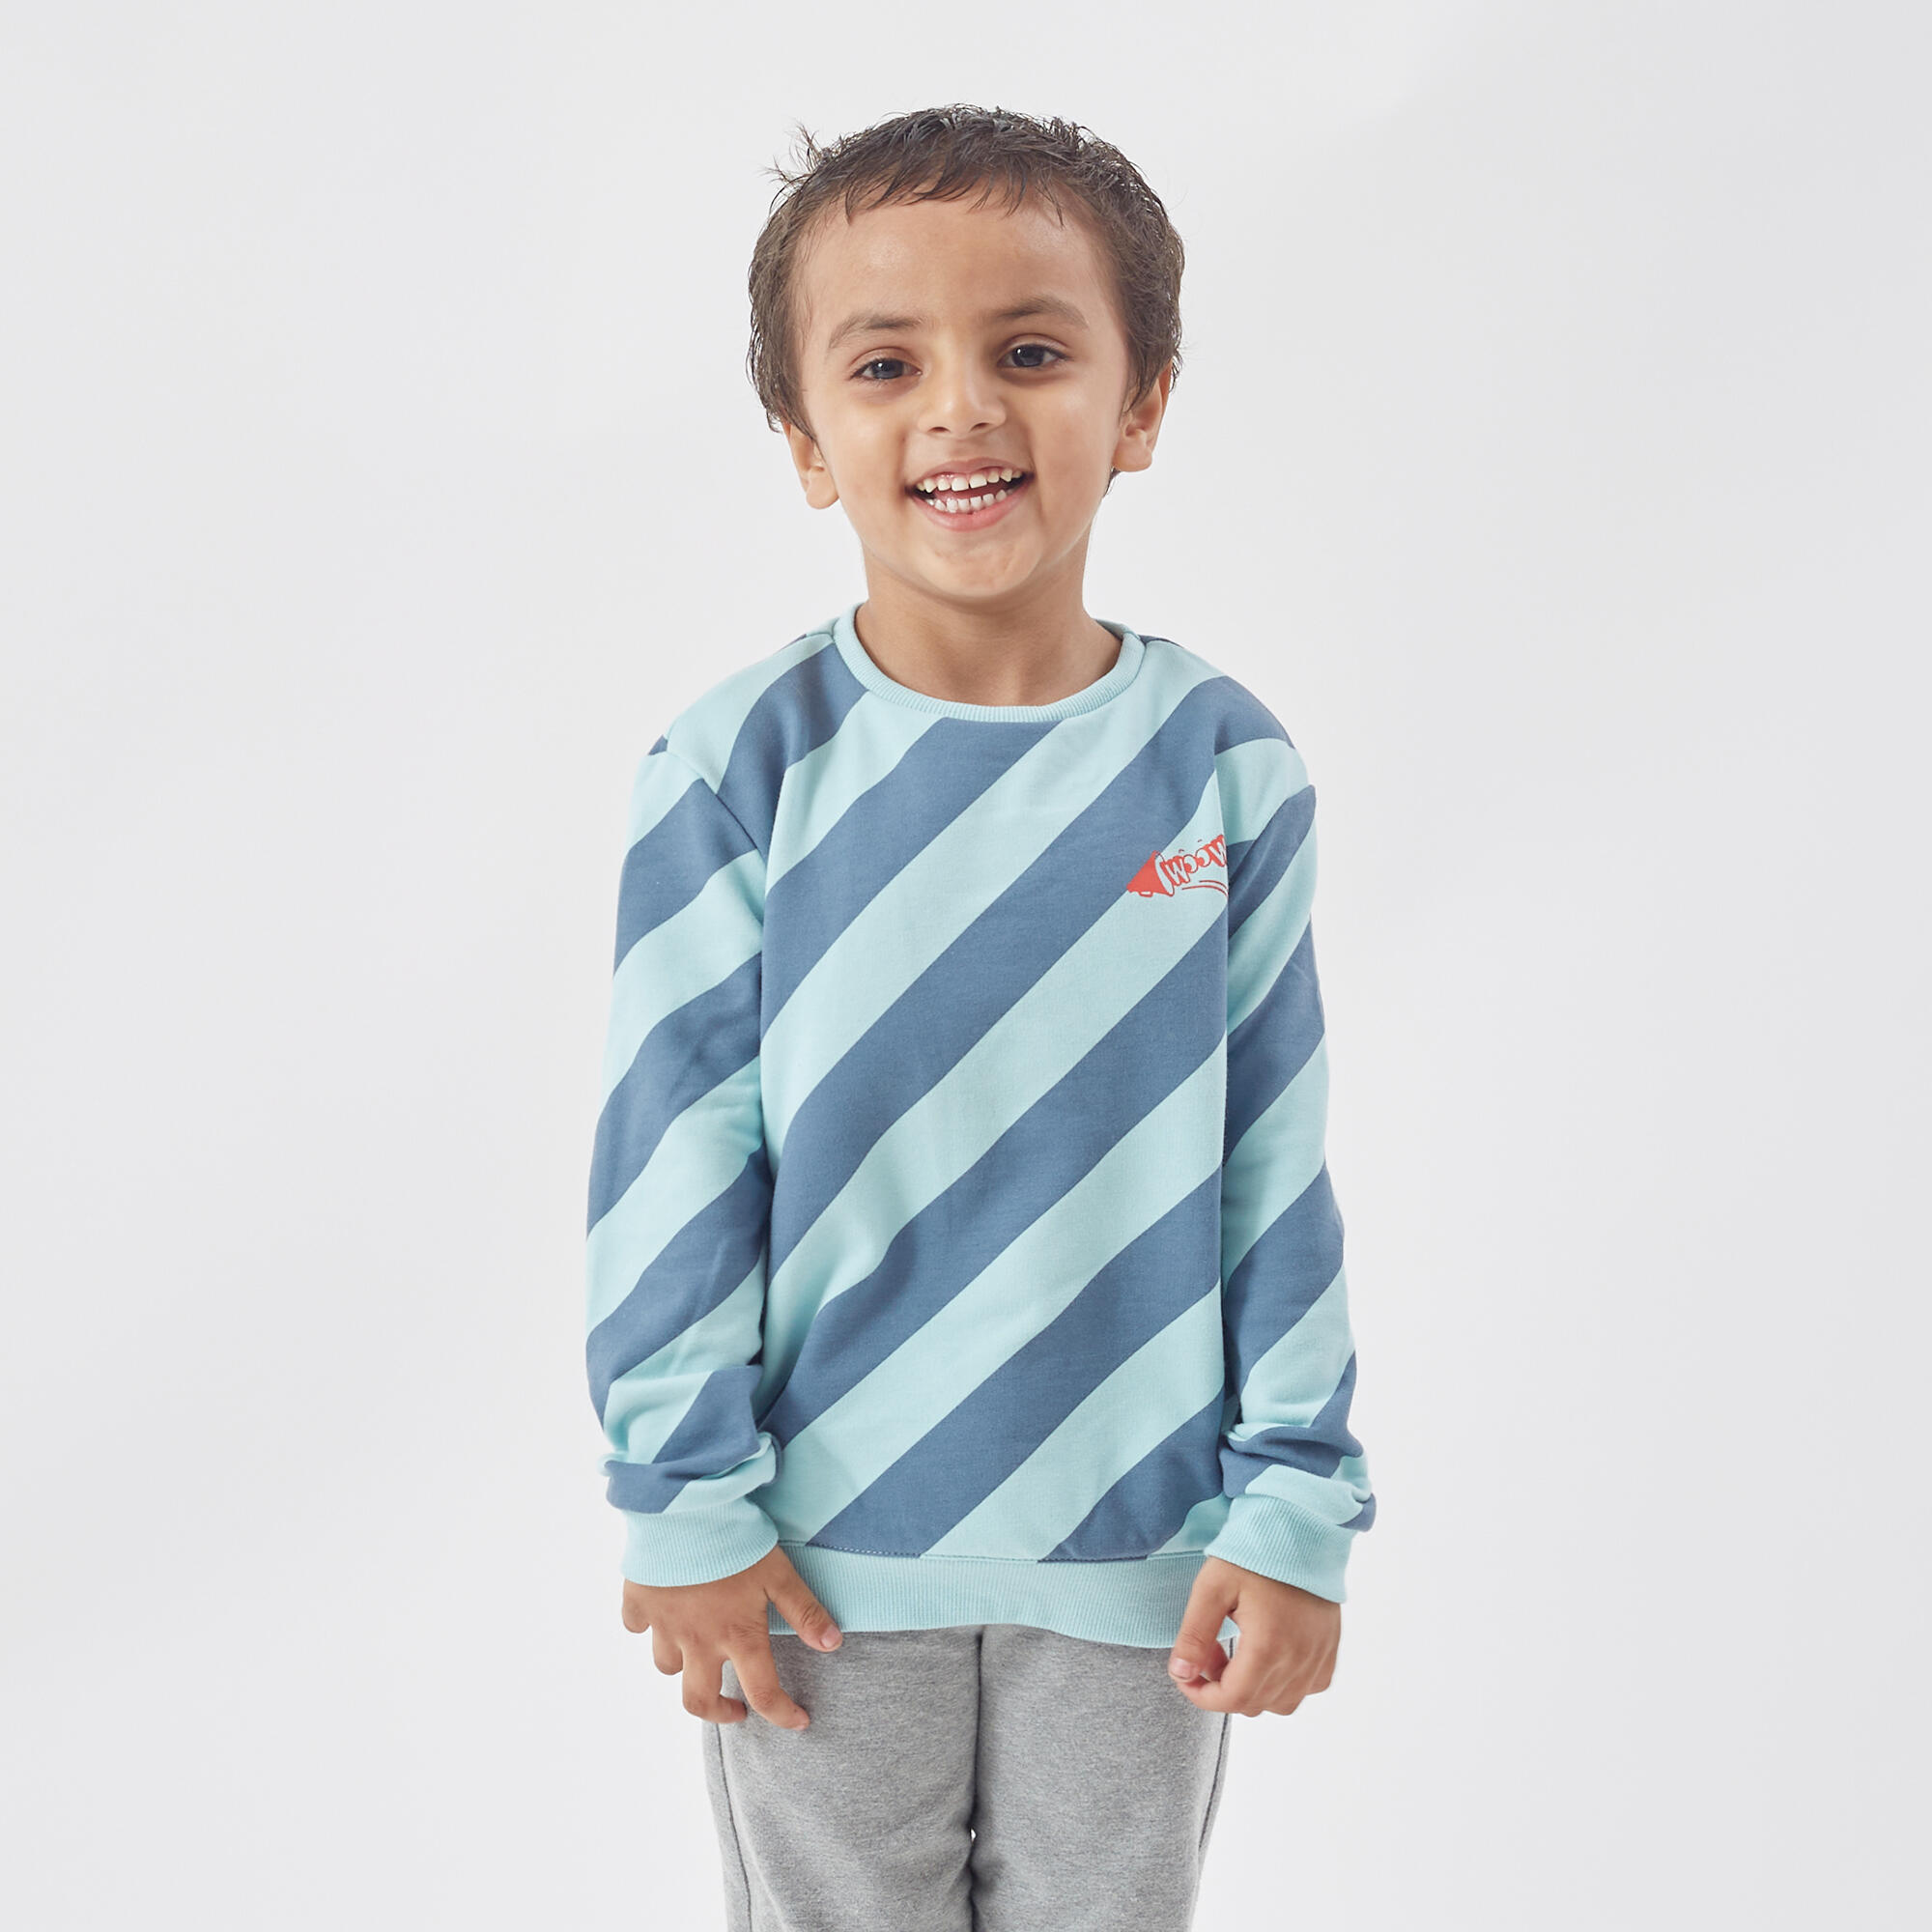 discount 88% KIDS FASHION Jumpers & Sweatshirts Basic Navy Blue 3Y Domyos sweatshirt 